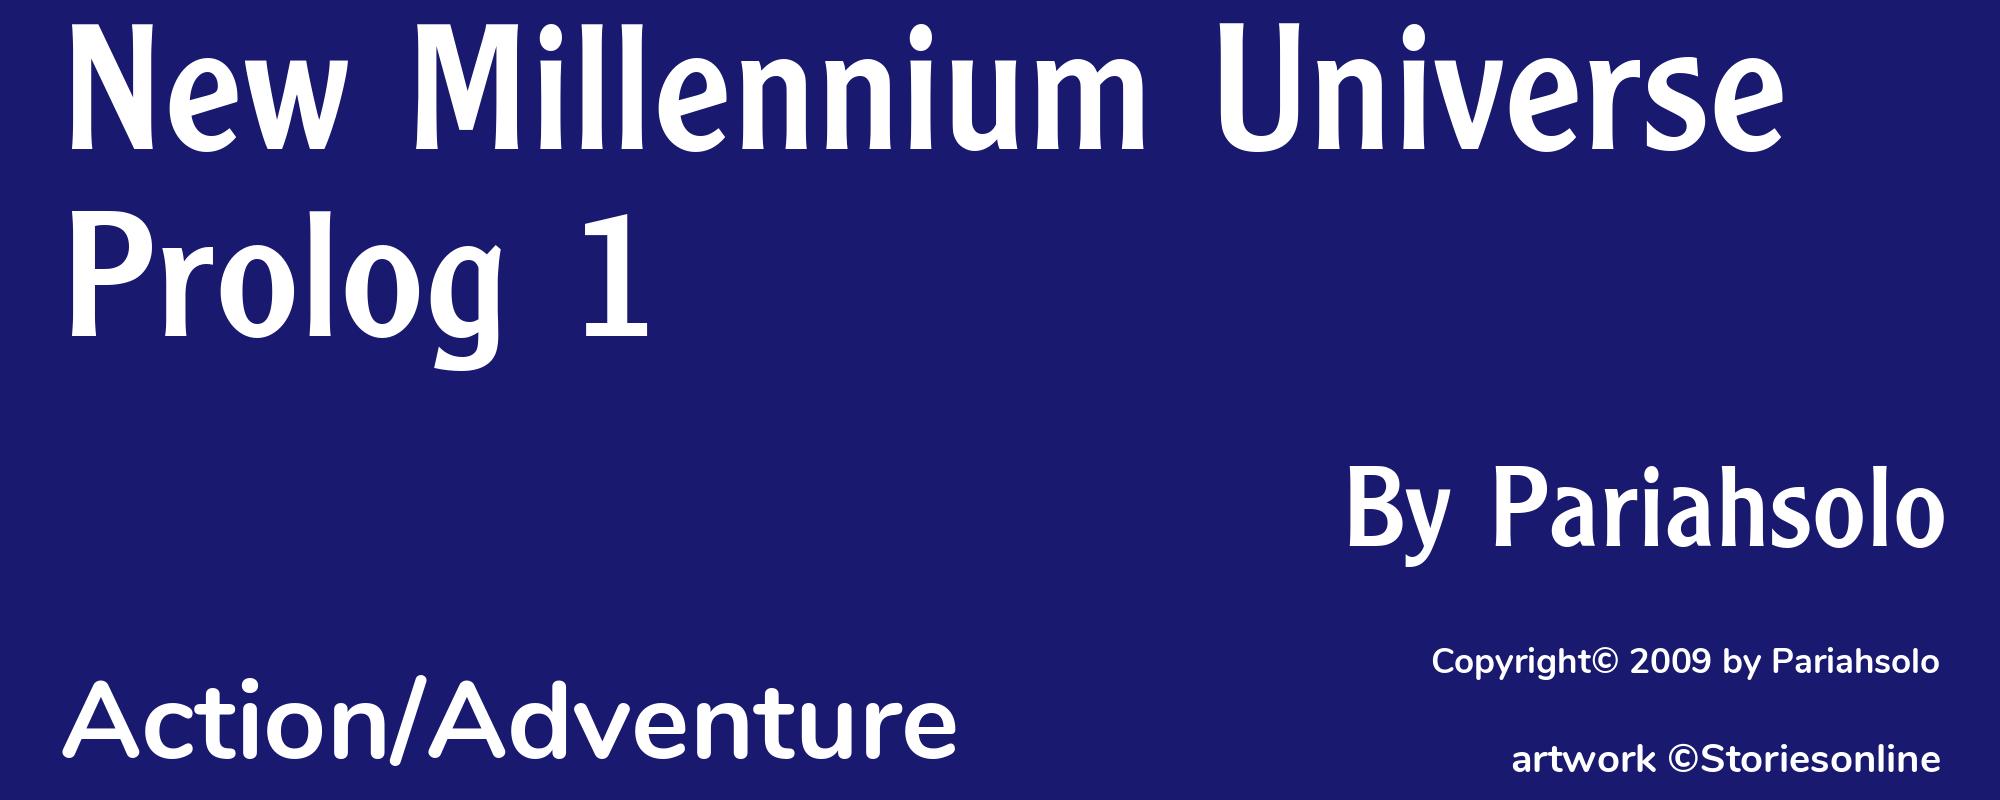 New Millennium Universe Prolog 1 - Cover